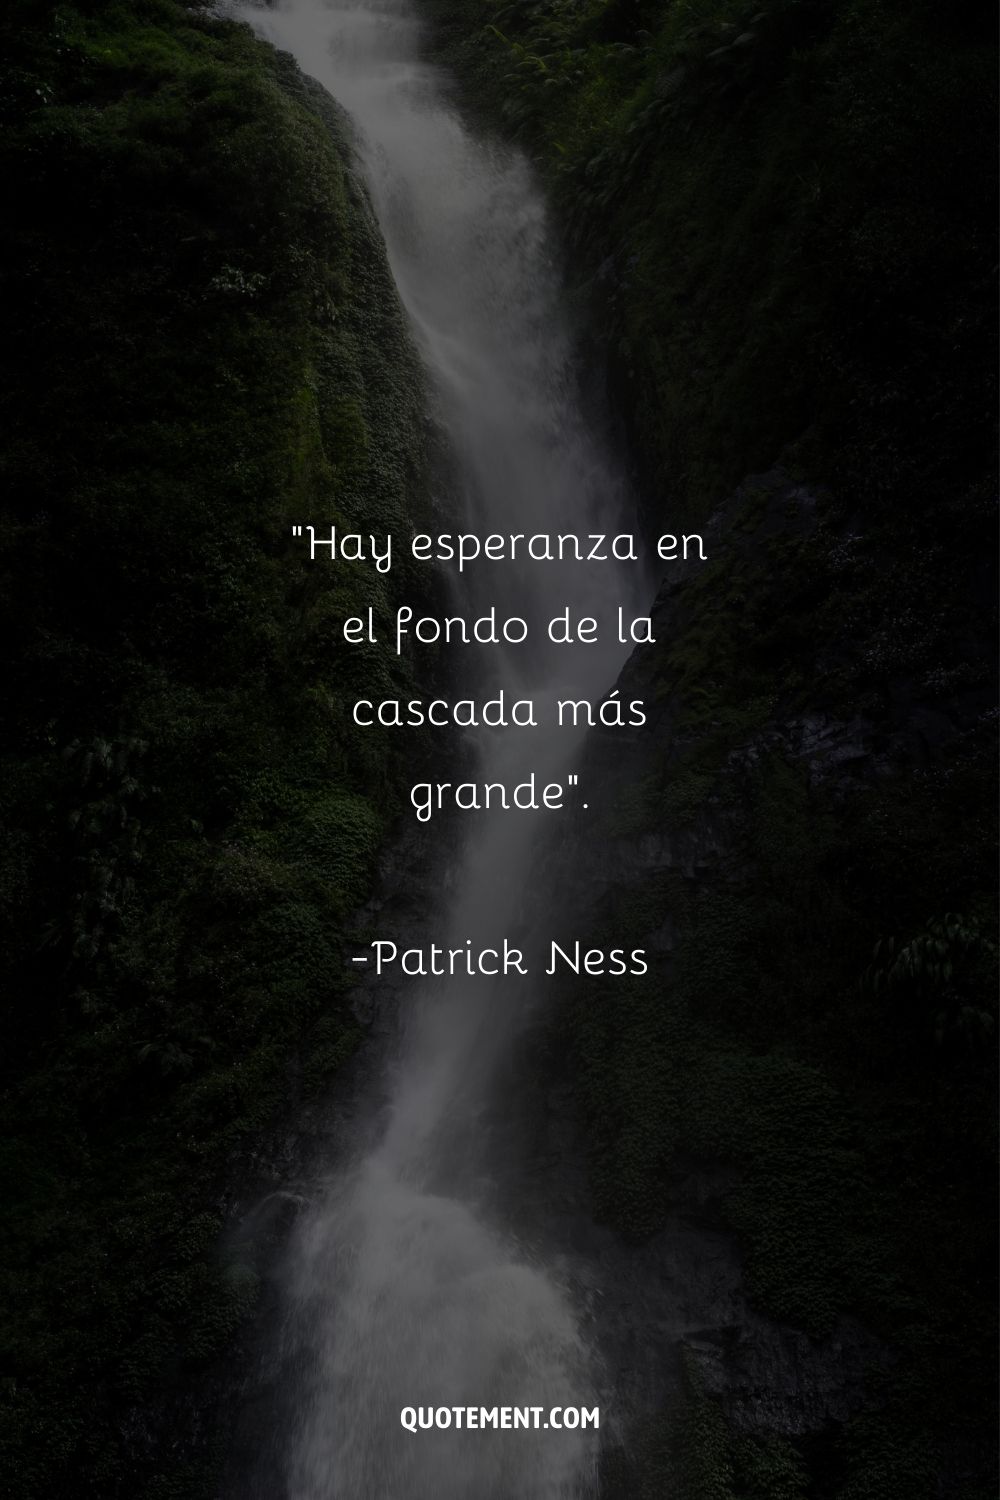 Una poderosa cita de Patrick Ness sobre la esperanza y una cascada de fondo